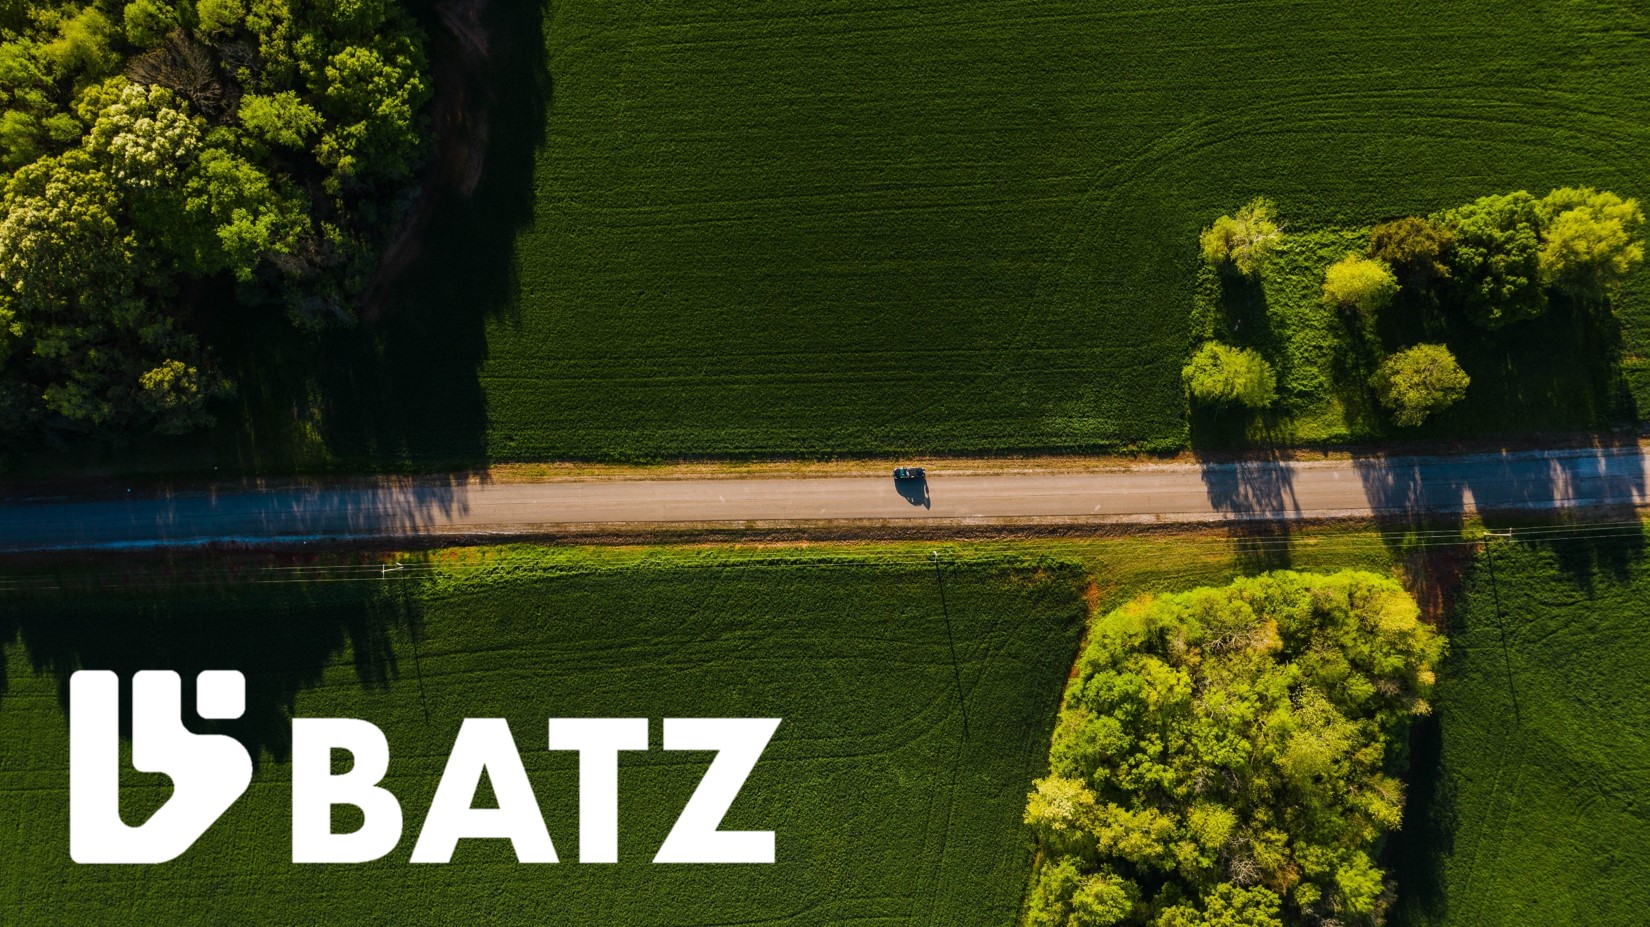 Sustainable  materials strategies in BATZ